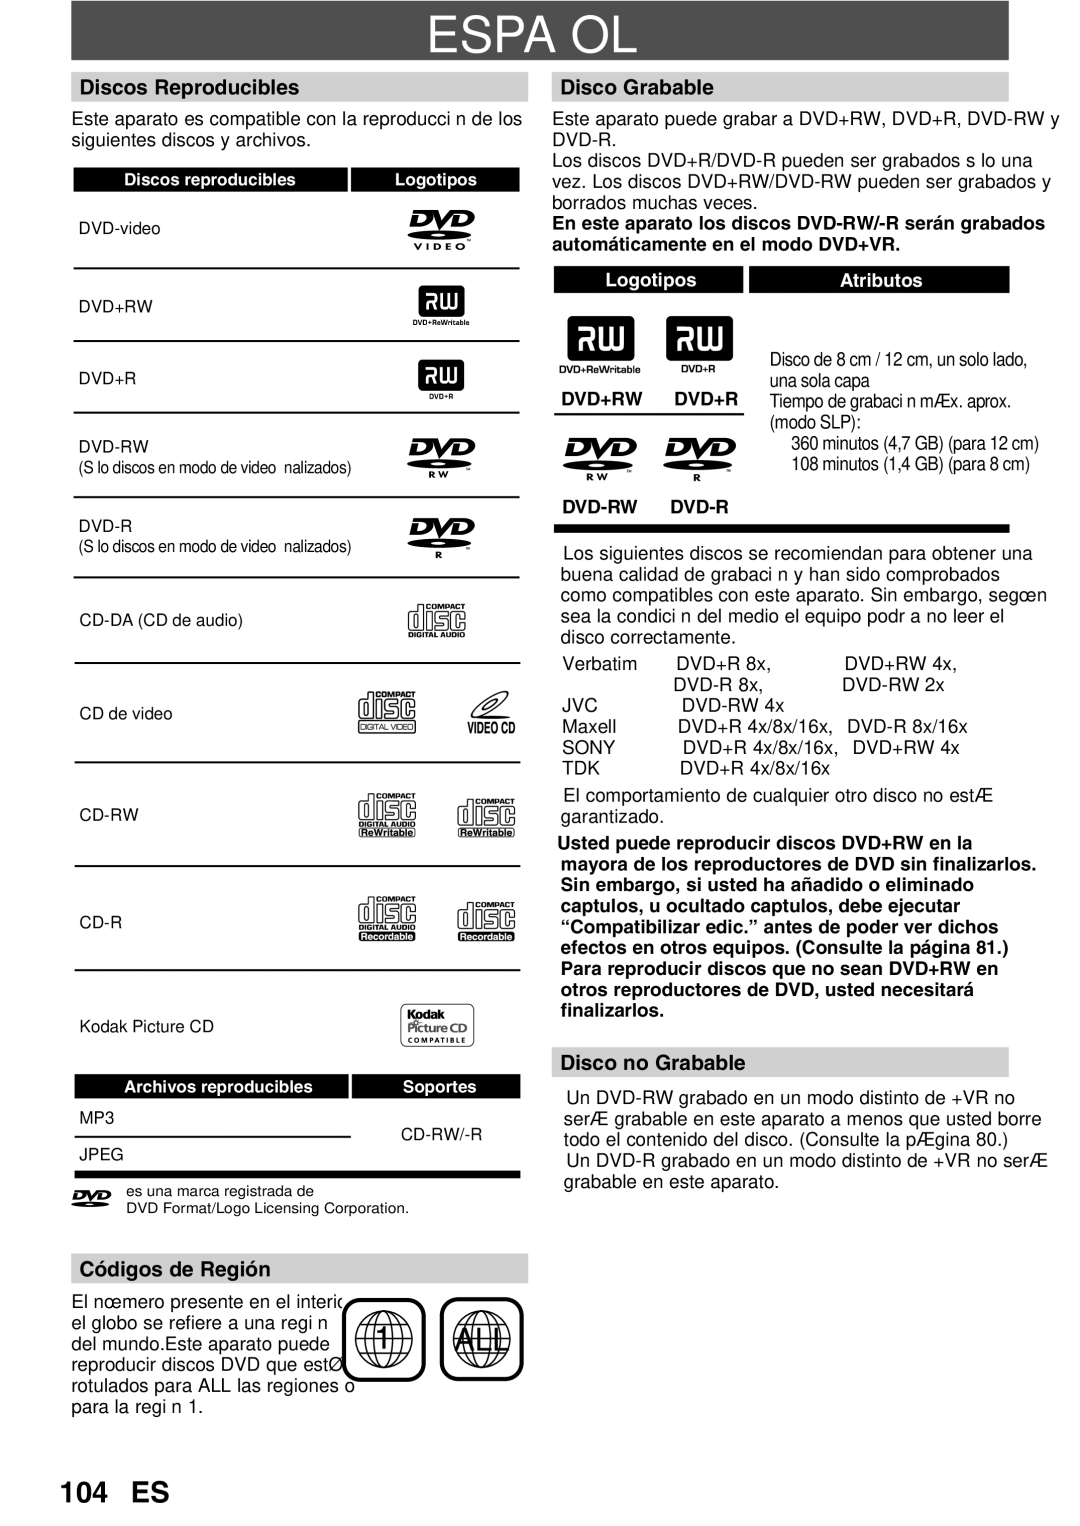 Magnavox 1VMN26713A owner manual Español, Discos Reproducibles, Disco Grabable, Disco no Grabable, Códigos de Región 